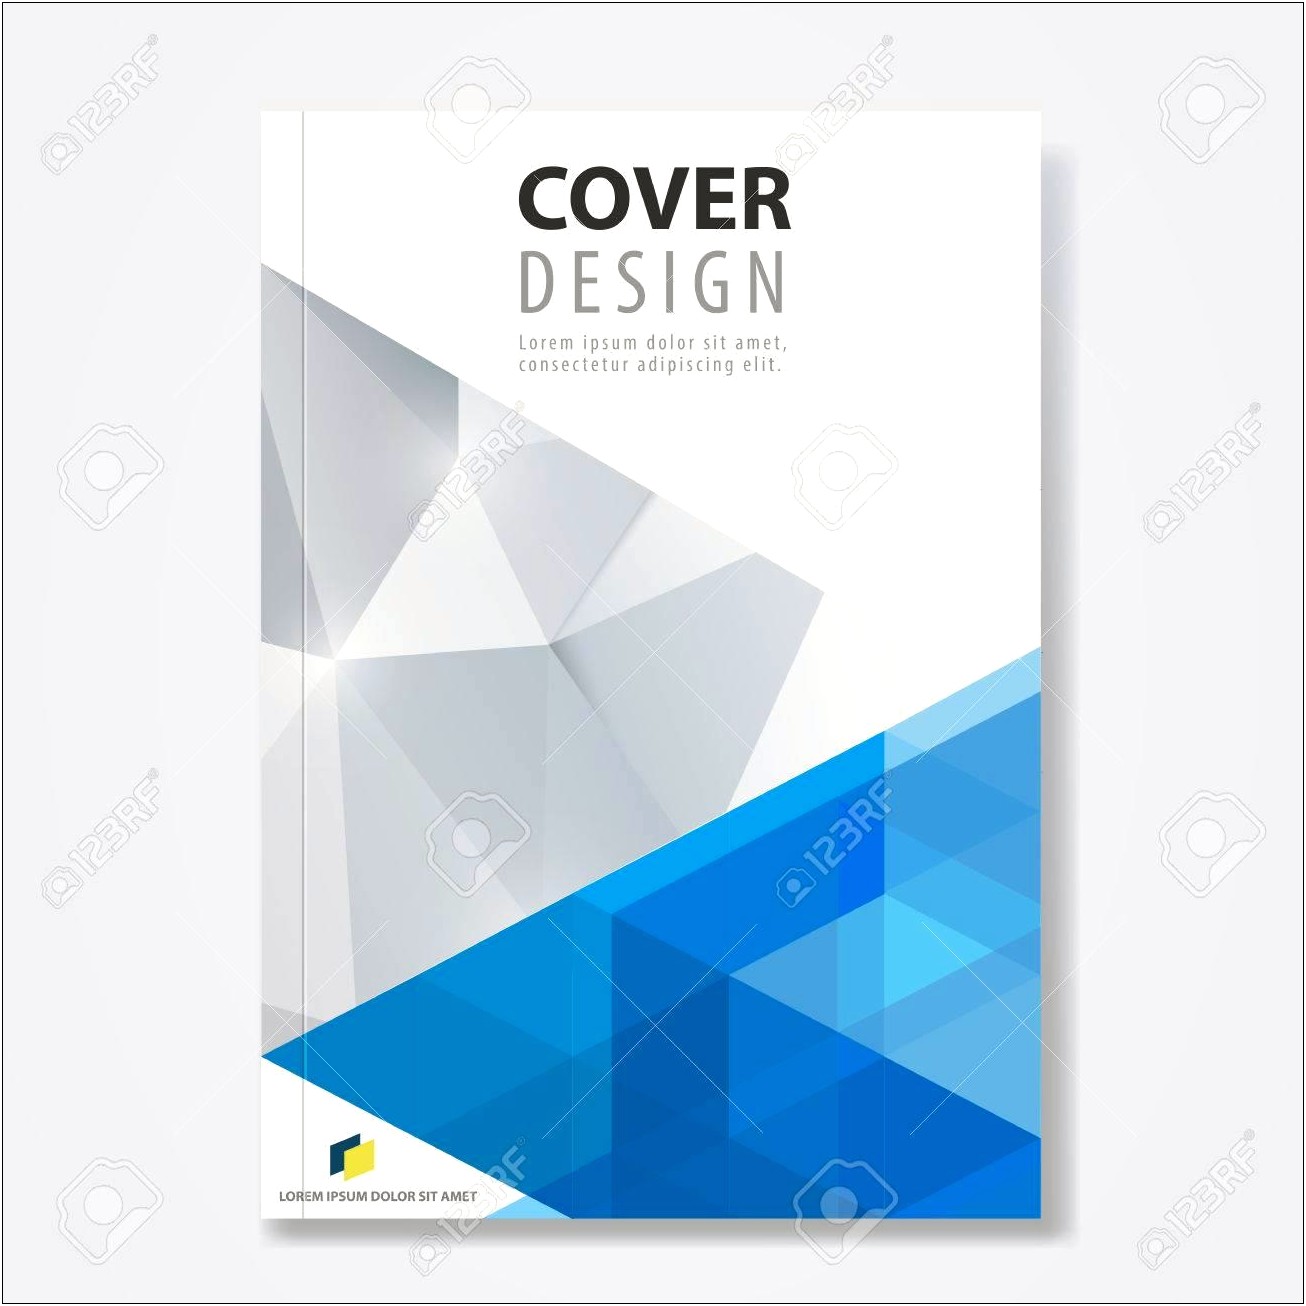 Free Book Cover Design Template Vector Illustration